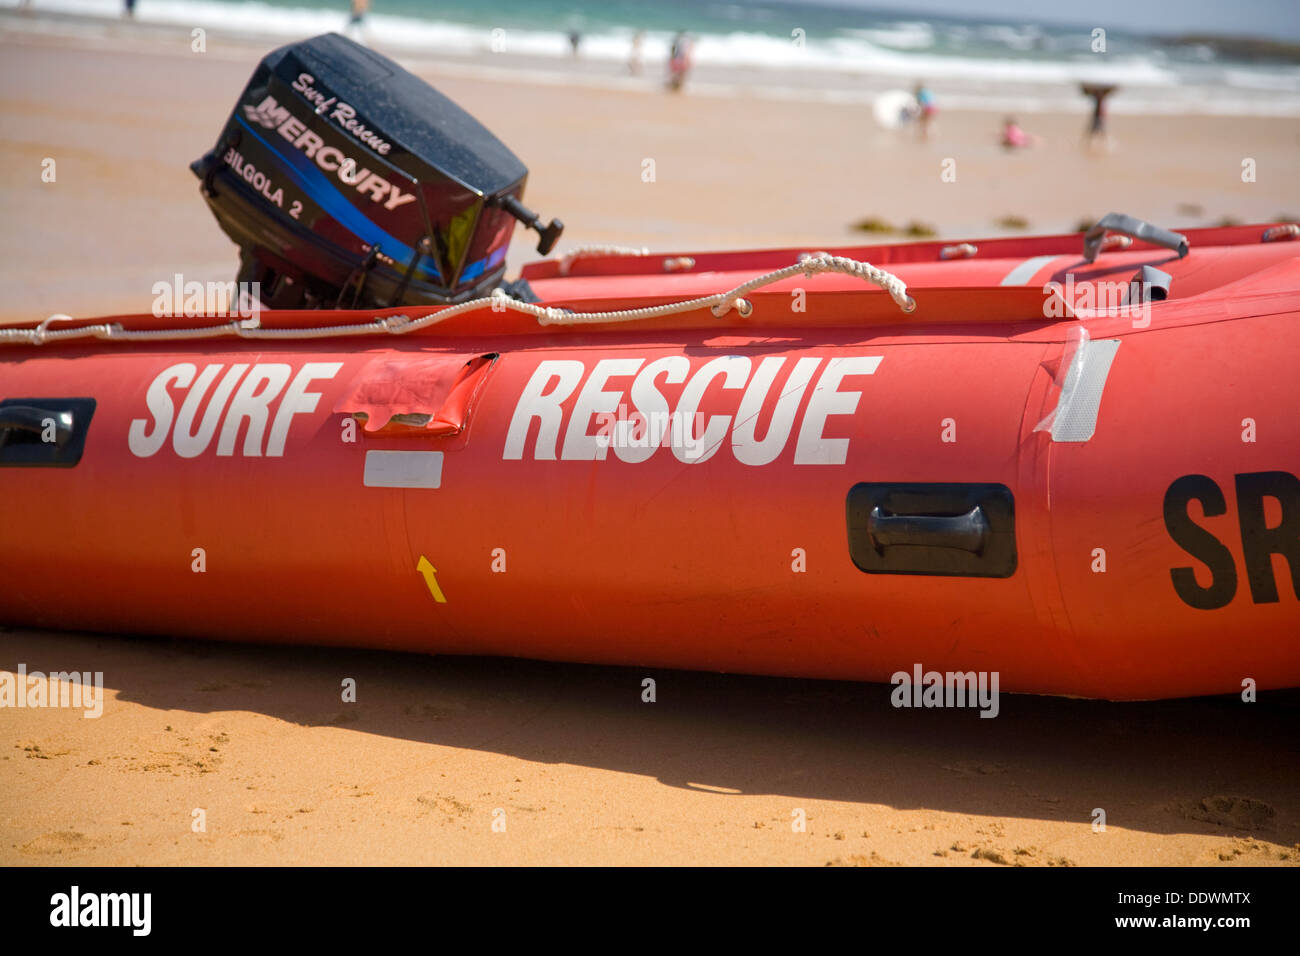 surf rescue dinghy boat on bilgola beach,sydney,australia Stock Photo